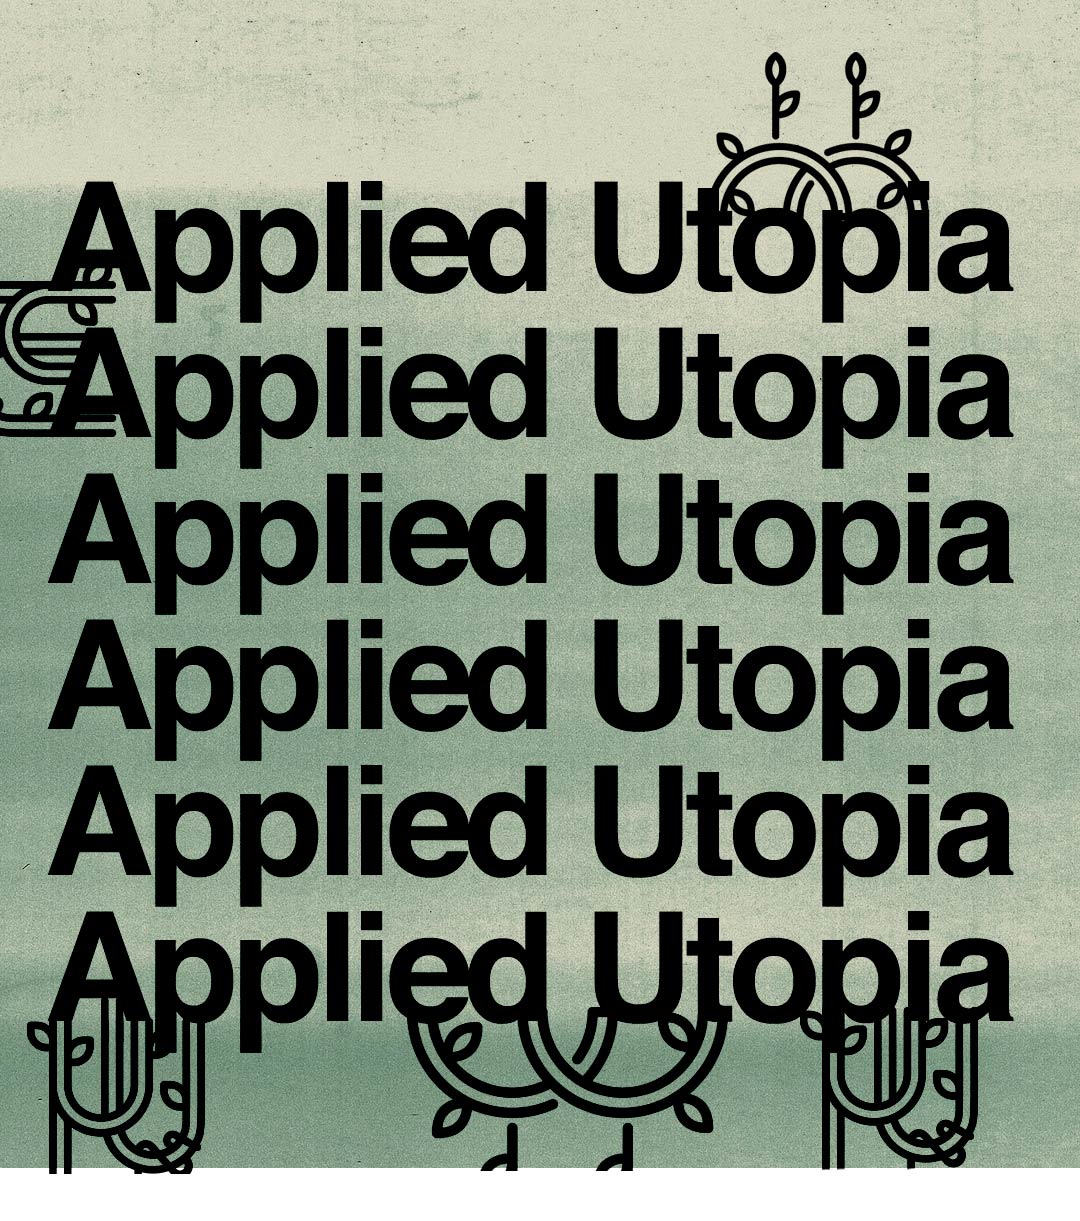 Applied Utopia